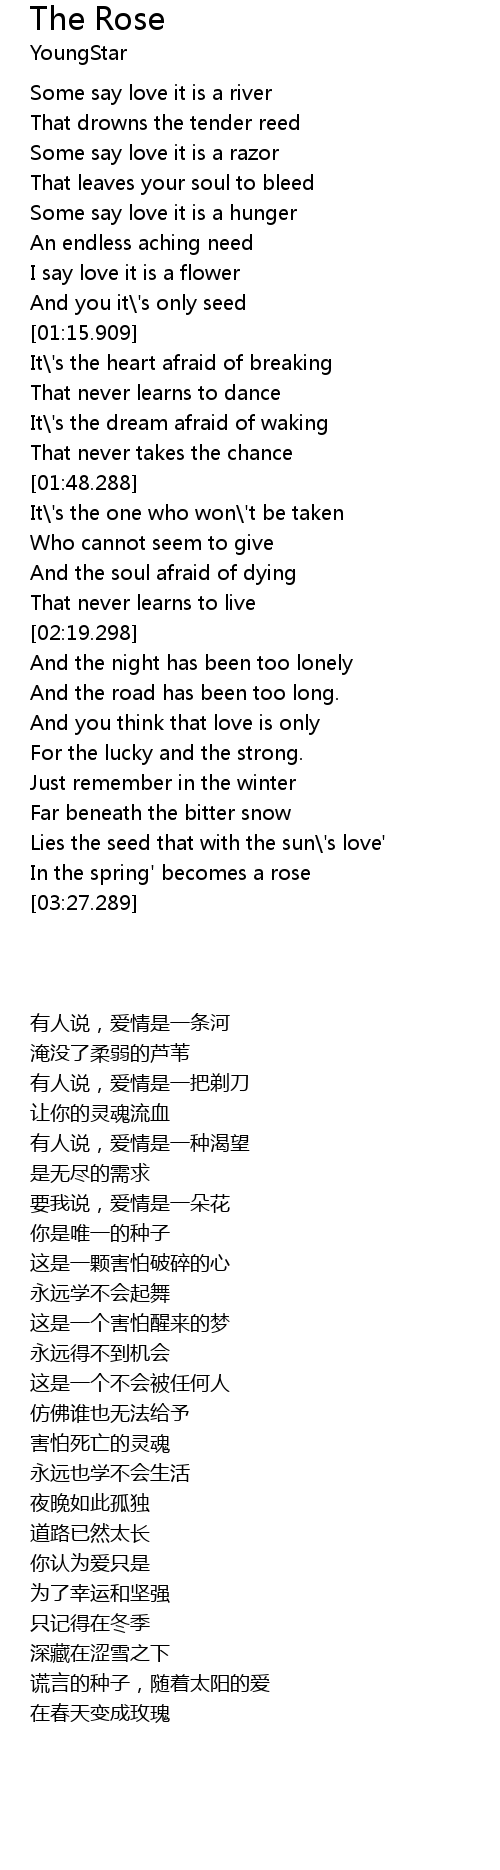 The rose song lyrics